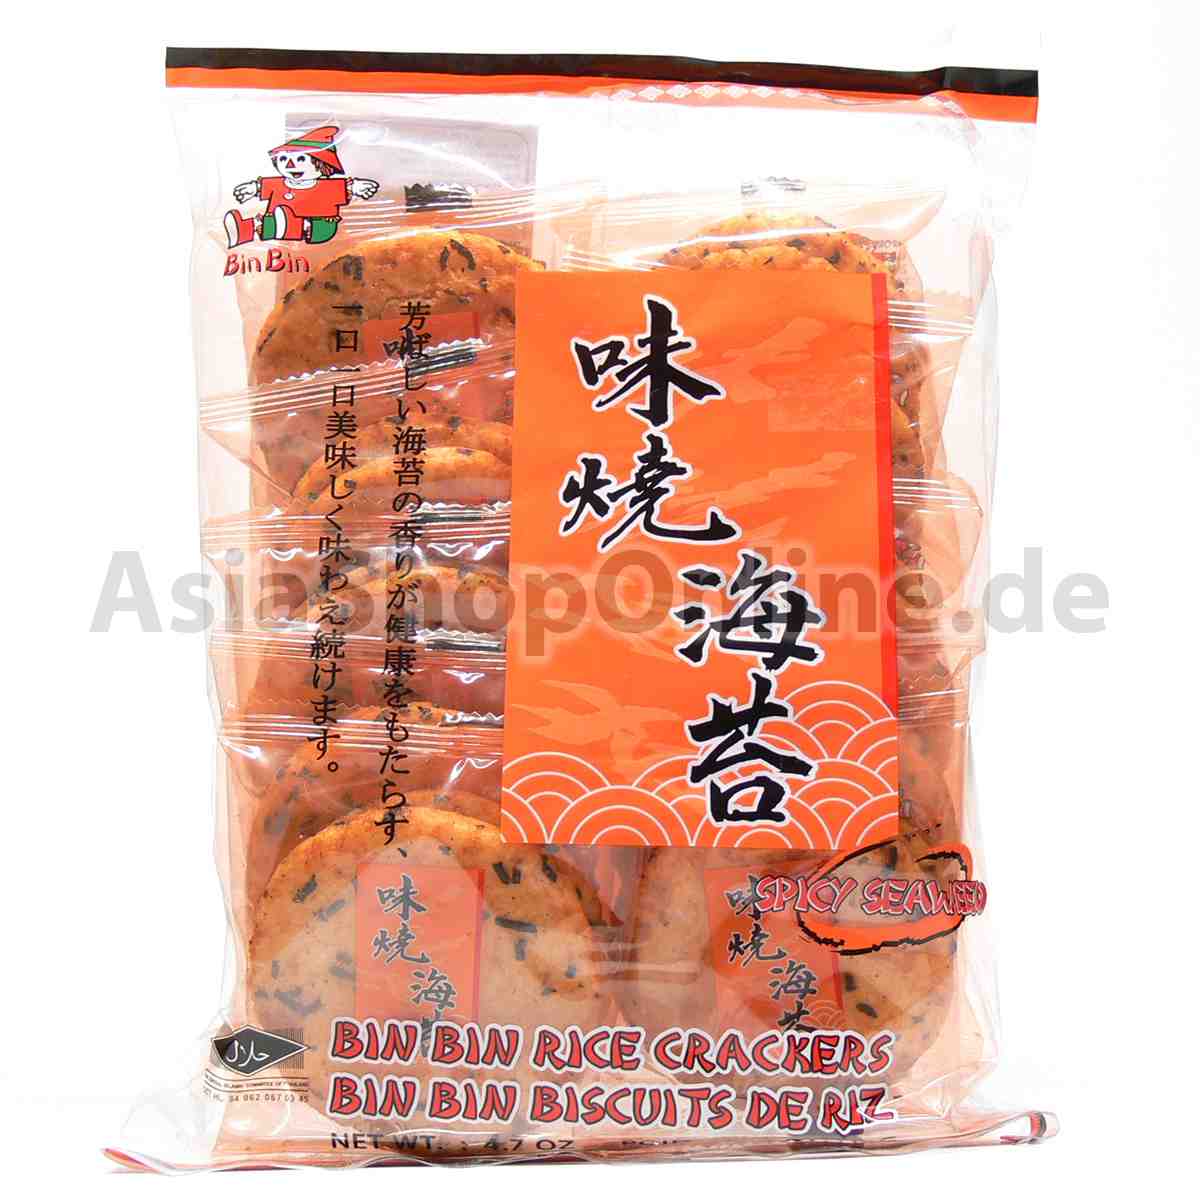 Würzige Reiscracker mit Seetang - Bin Bin - 135 g